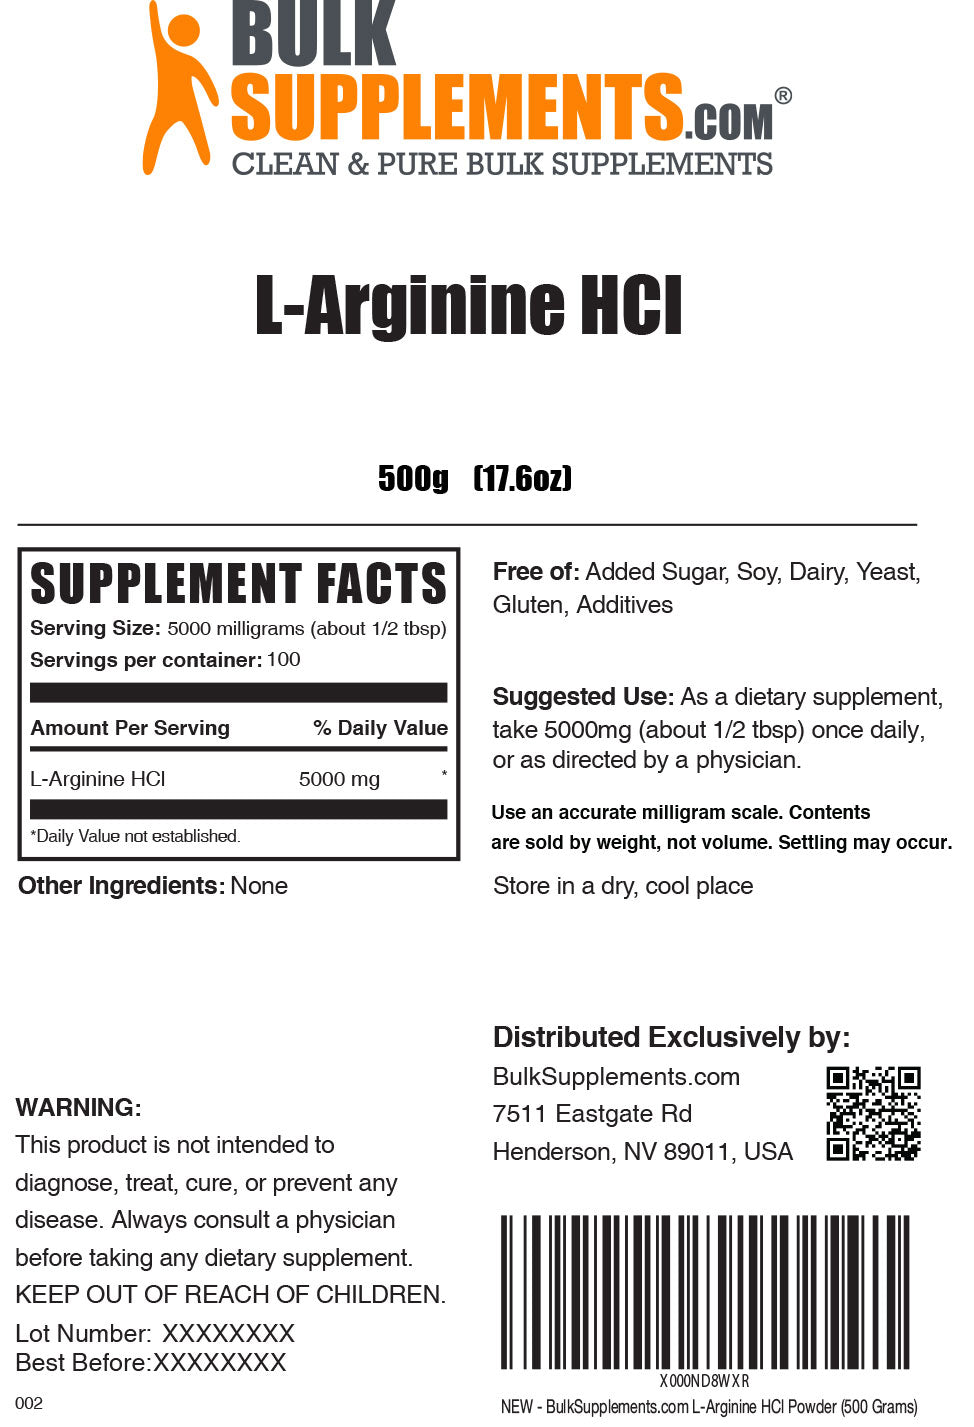 L-Arginine HCl powder label 500g